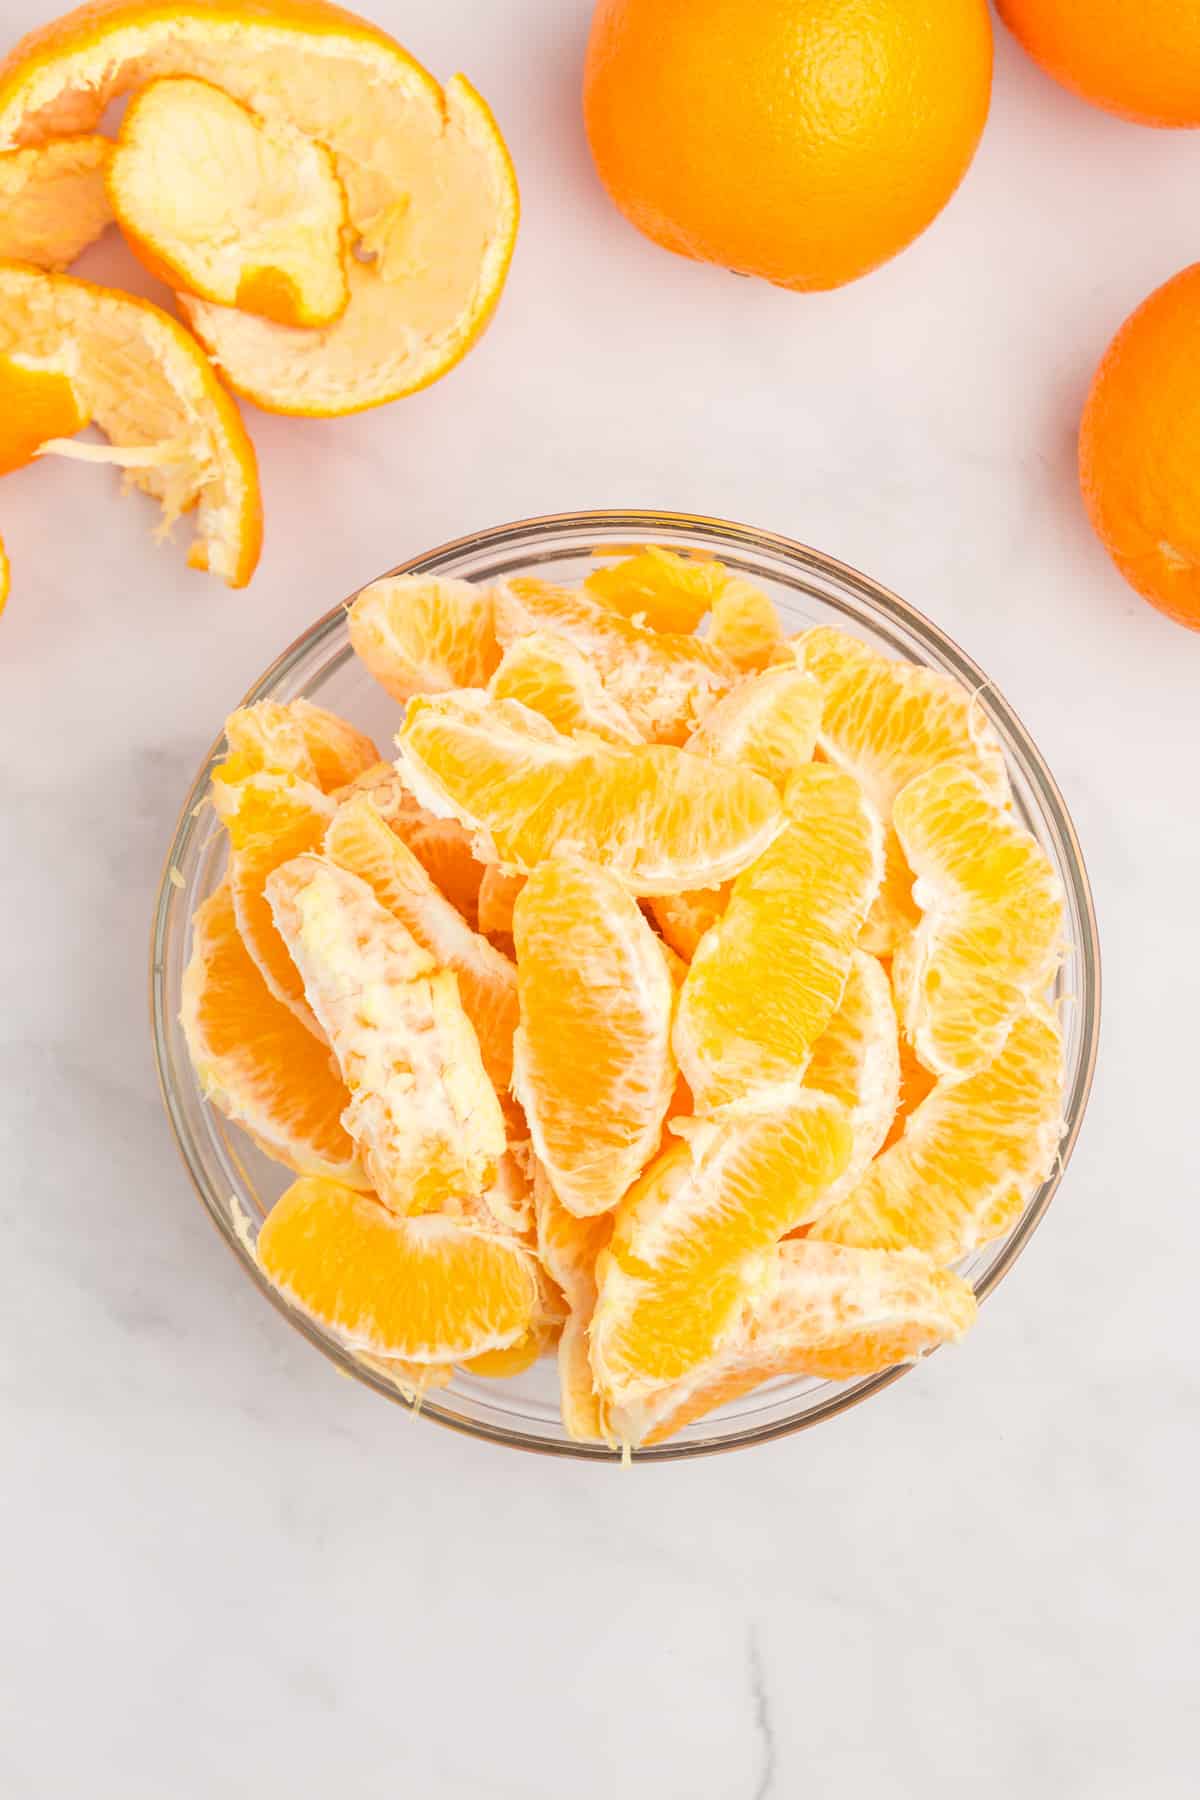 A bowl of orange segments.